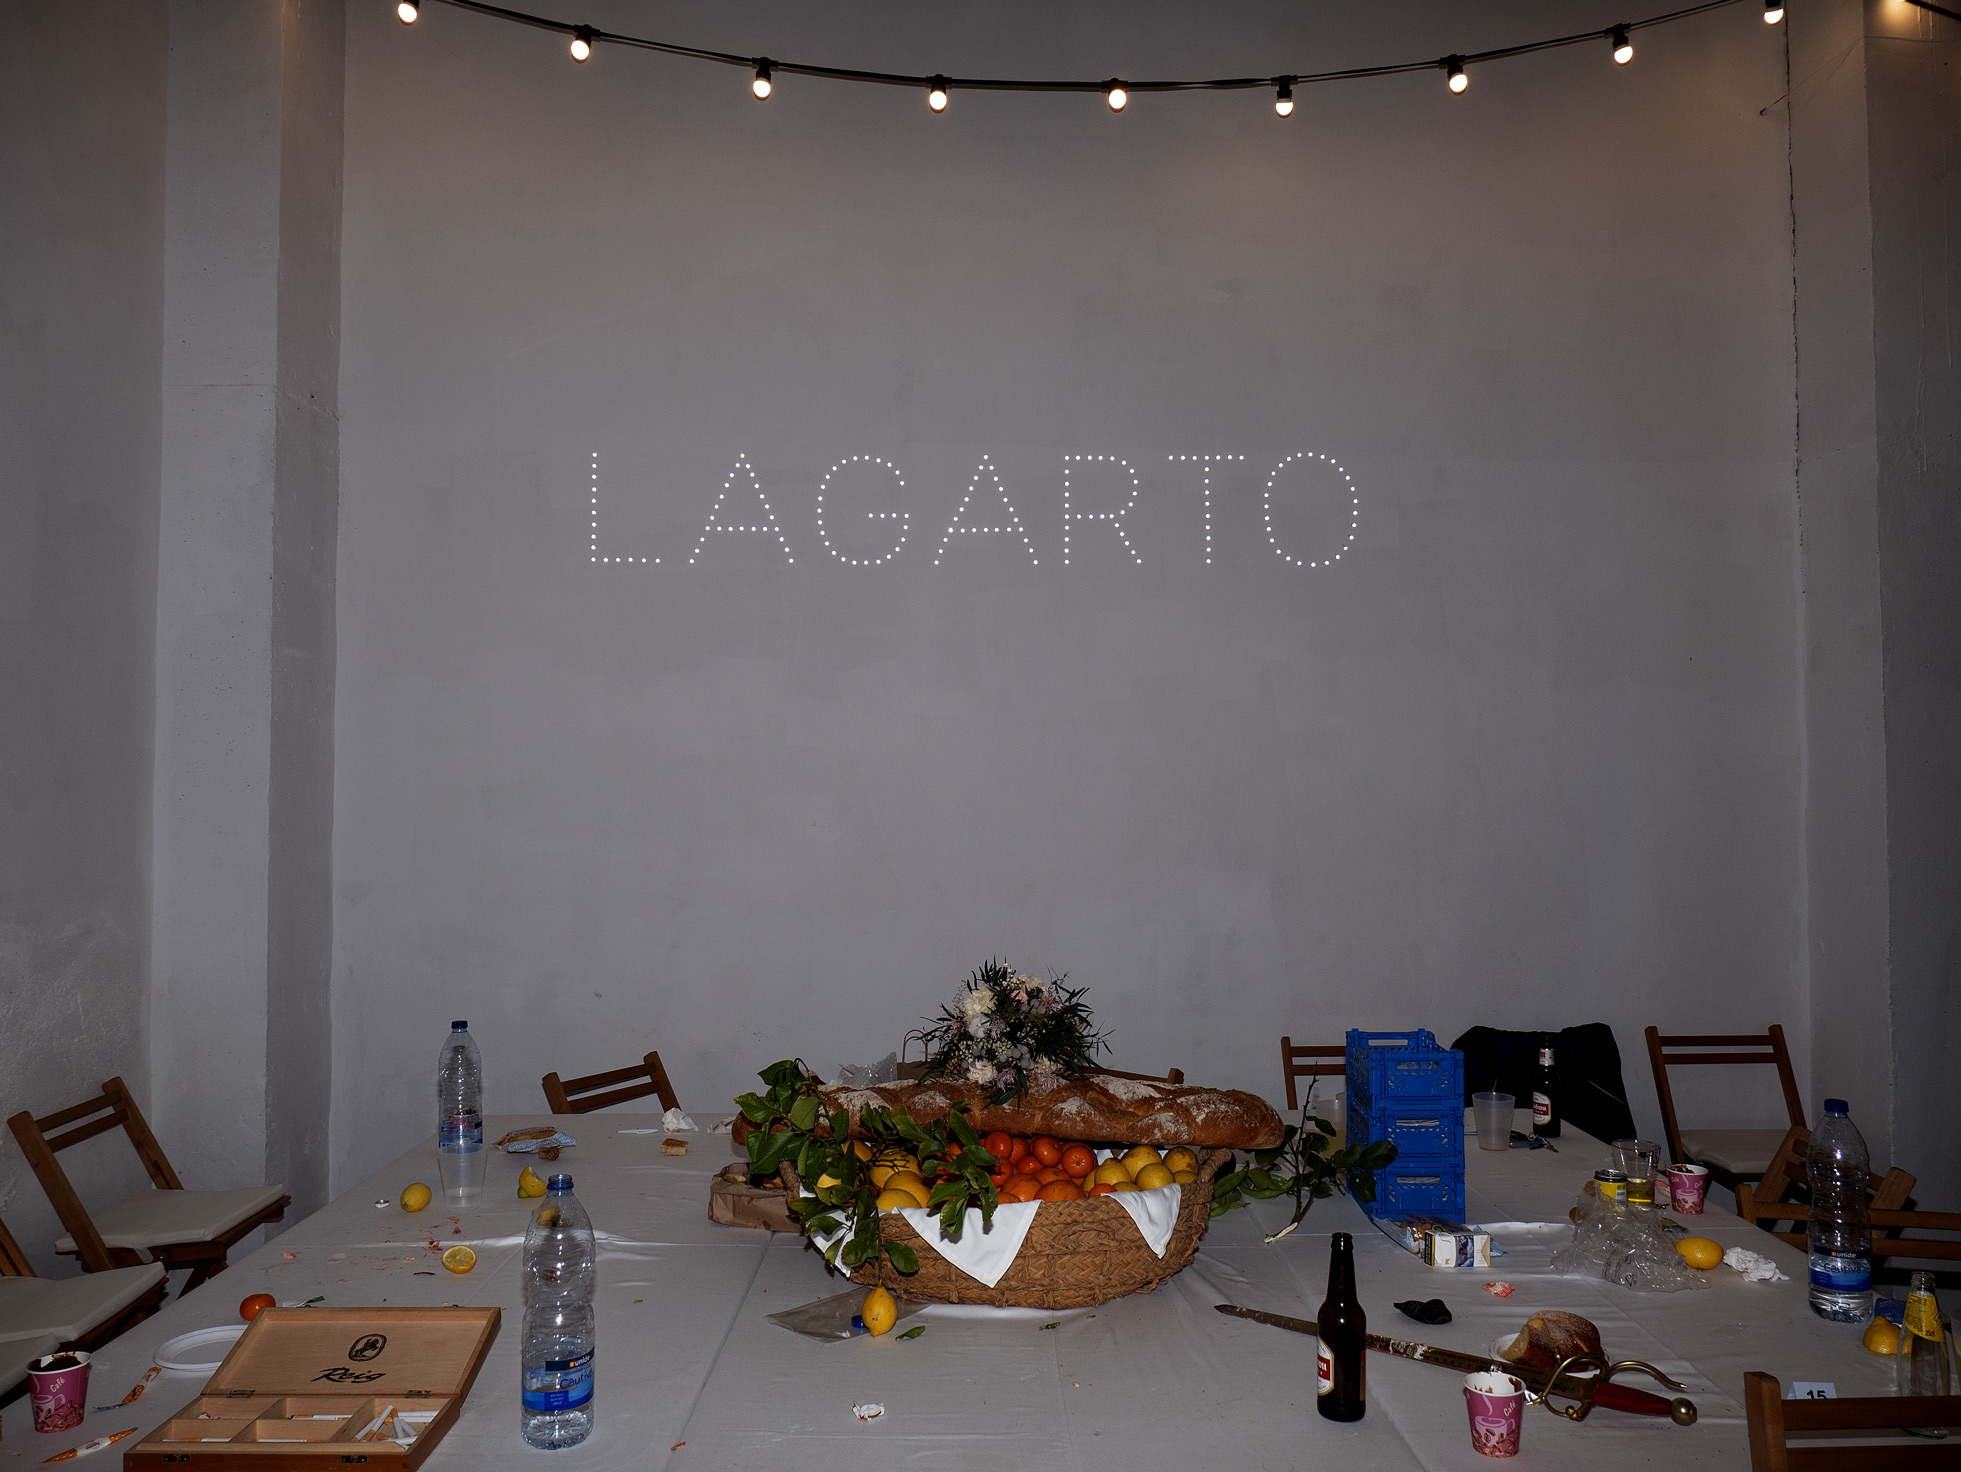 LAGARTO, 2020